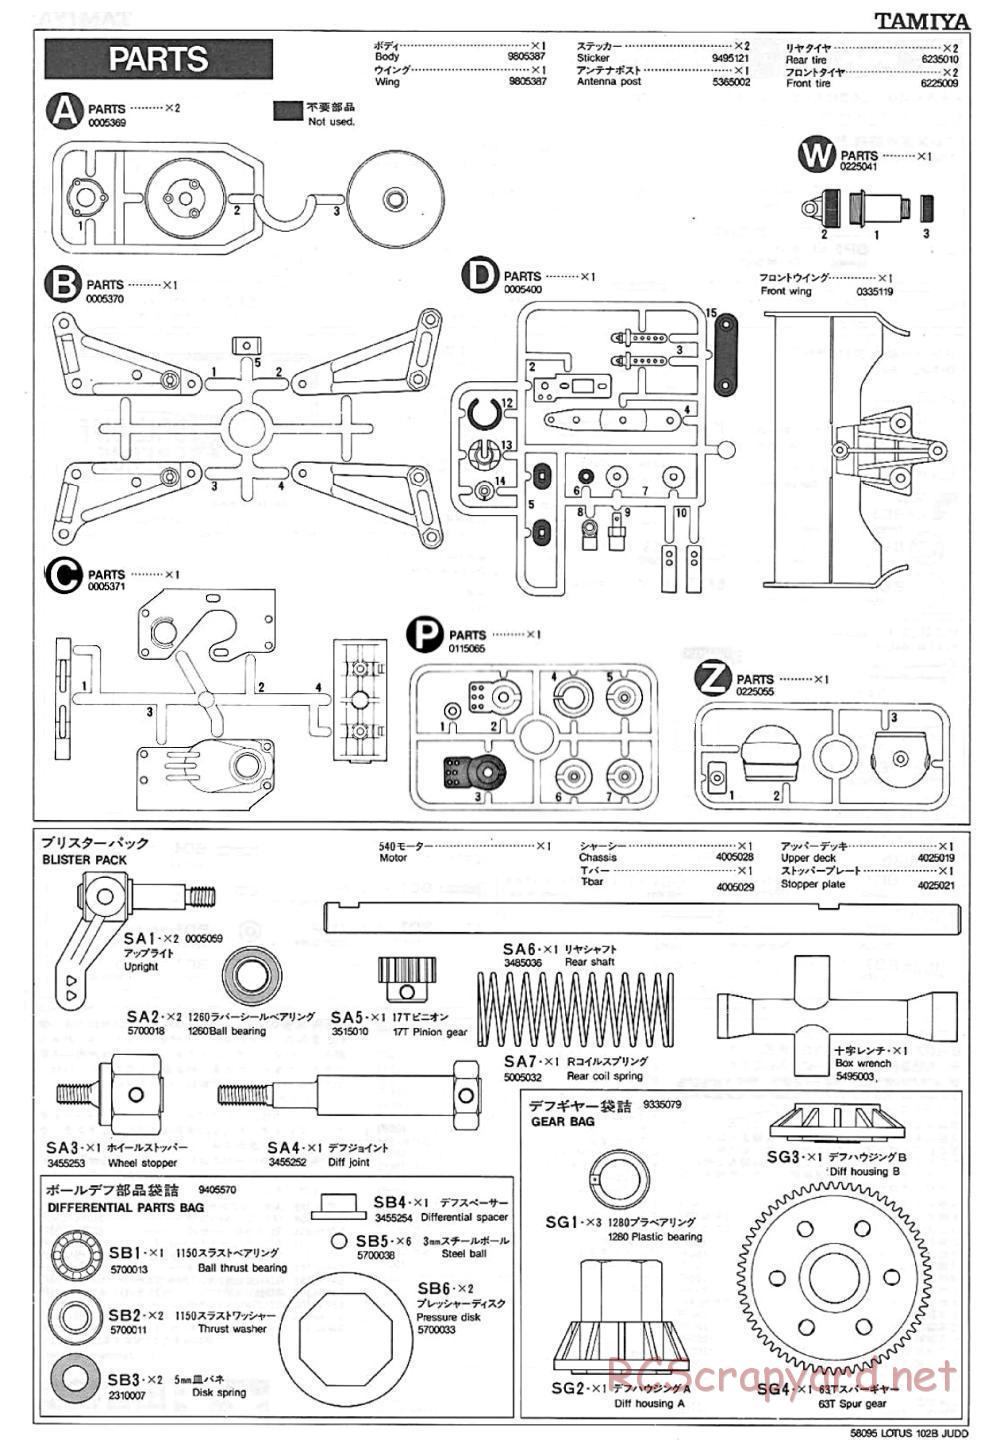 Tamiya - Lotus 102B Judd - 58095 - Manual - Page 17